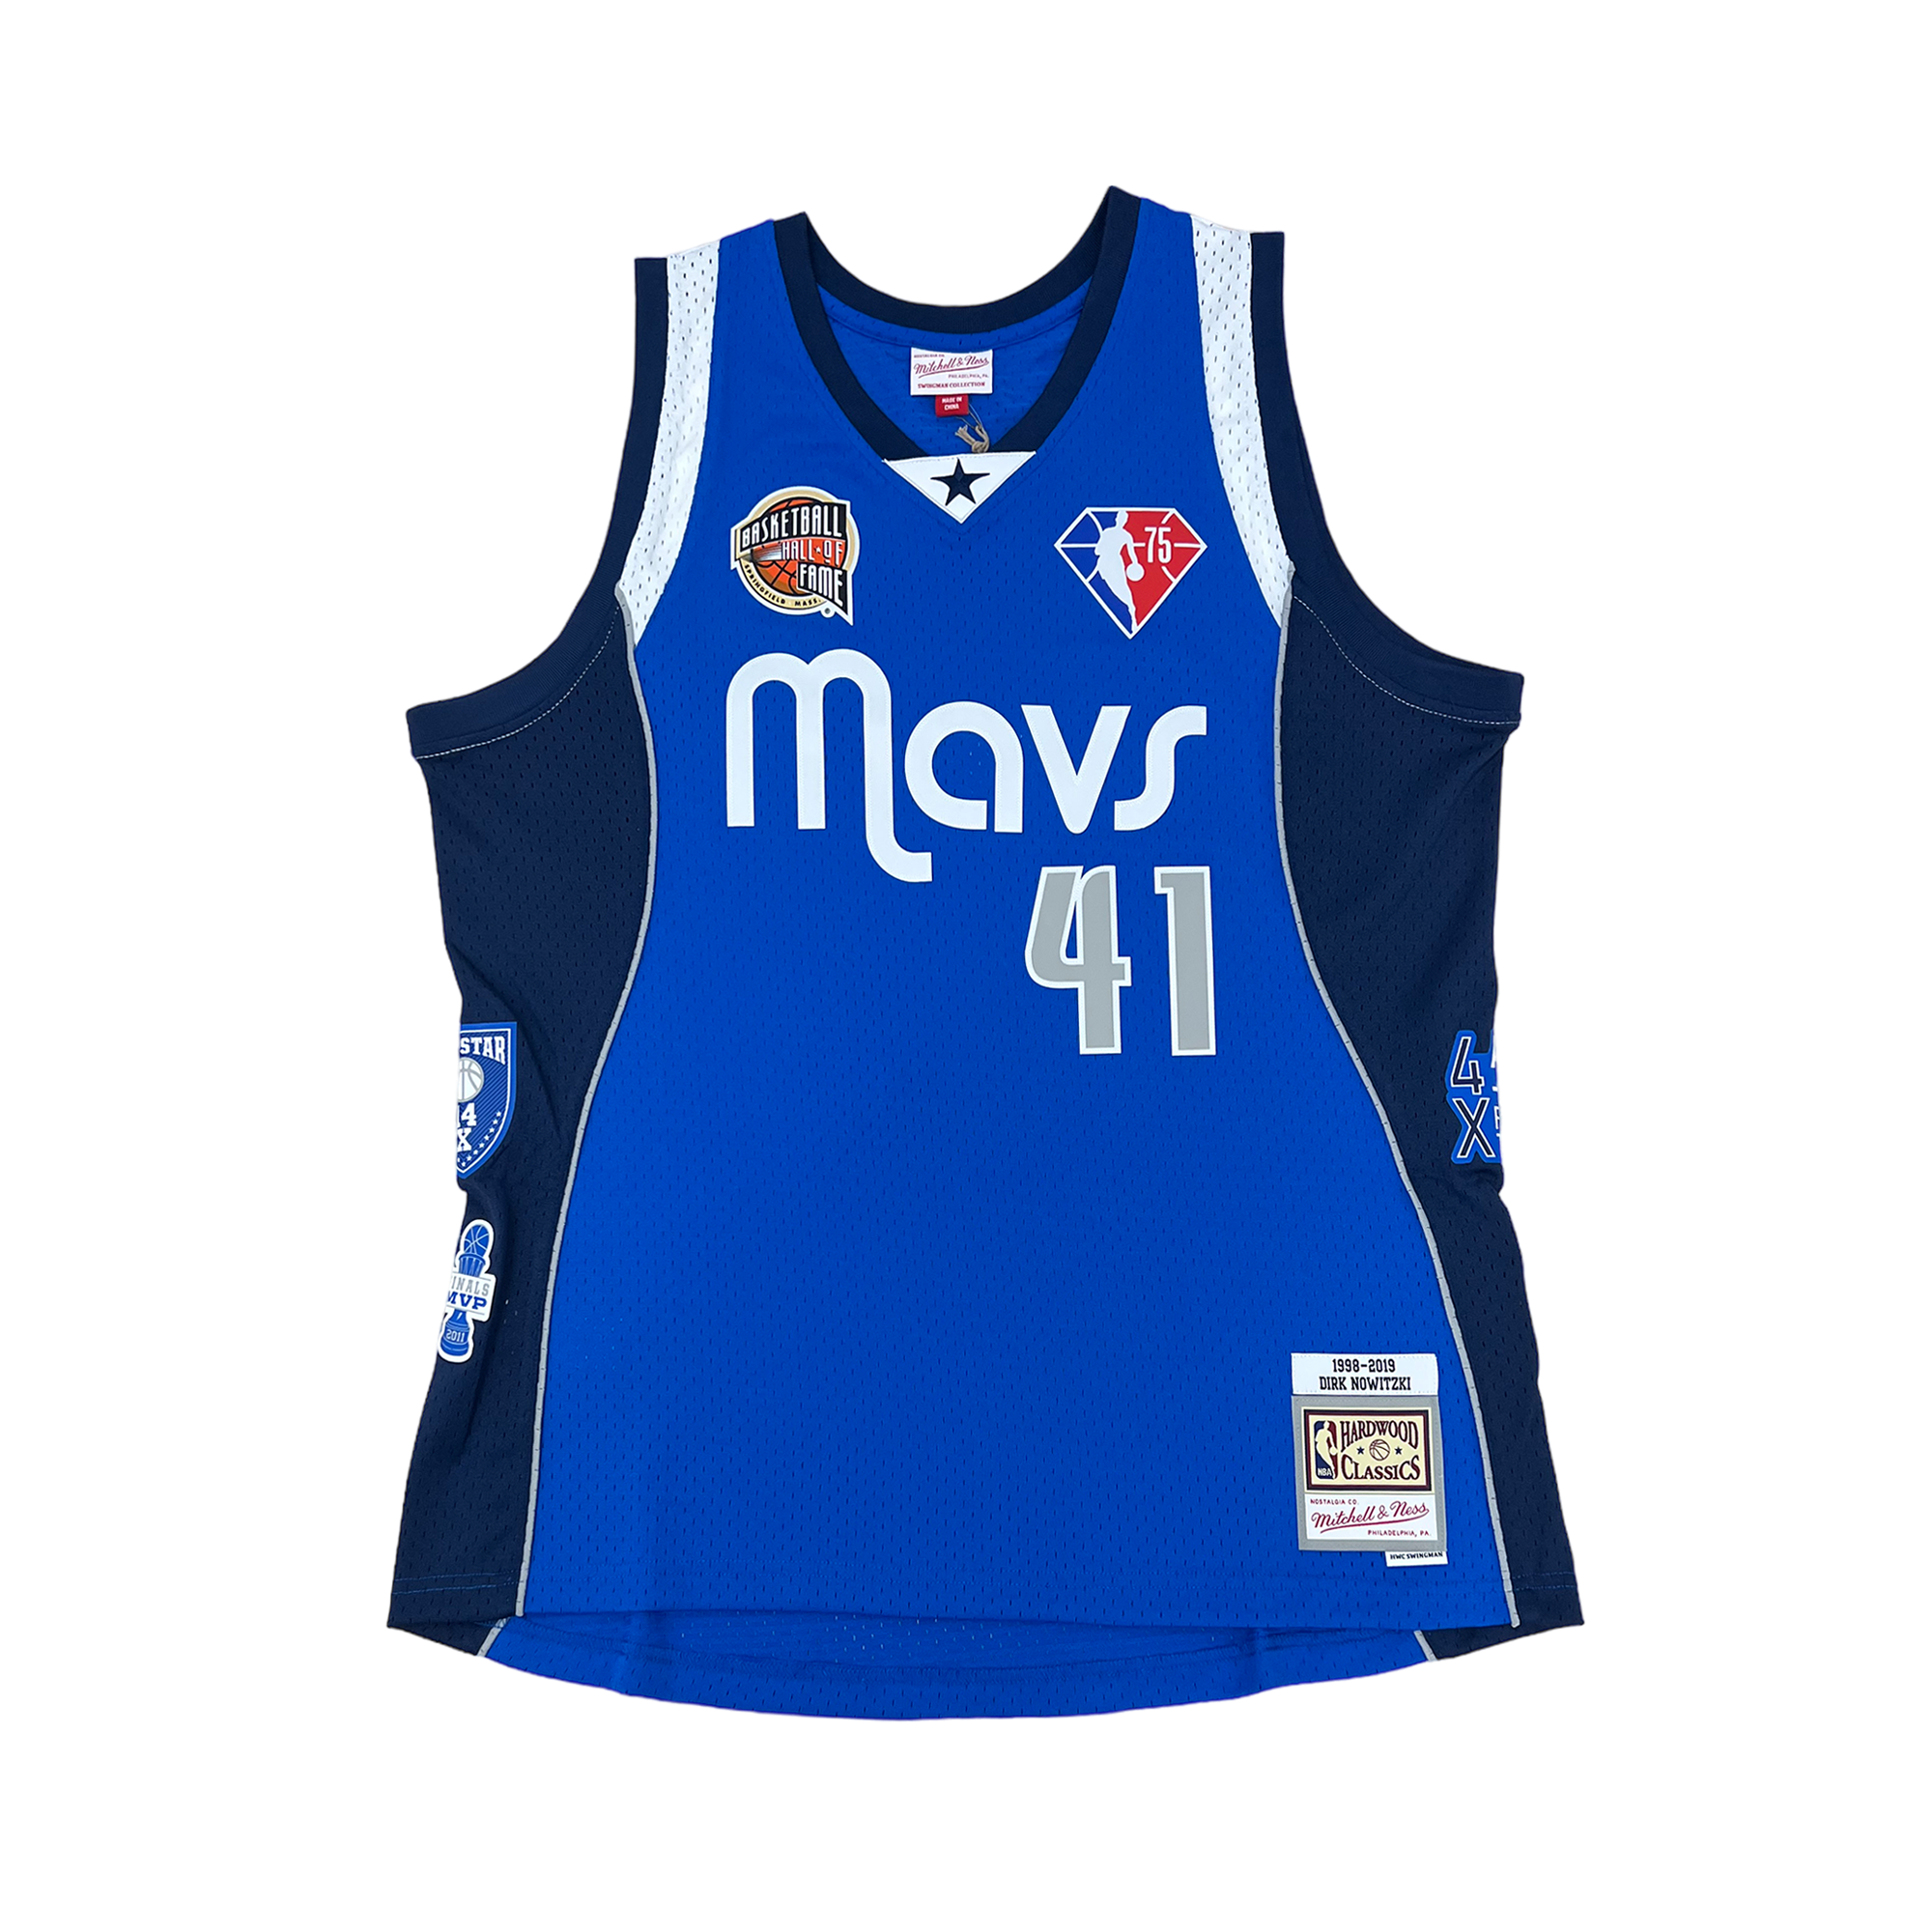 2011 NBA Authentic Dirk Nowitzki jersey, championship season, size